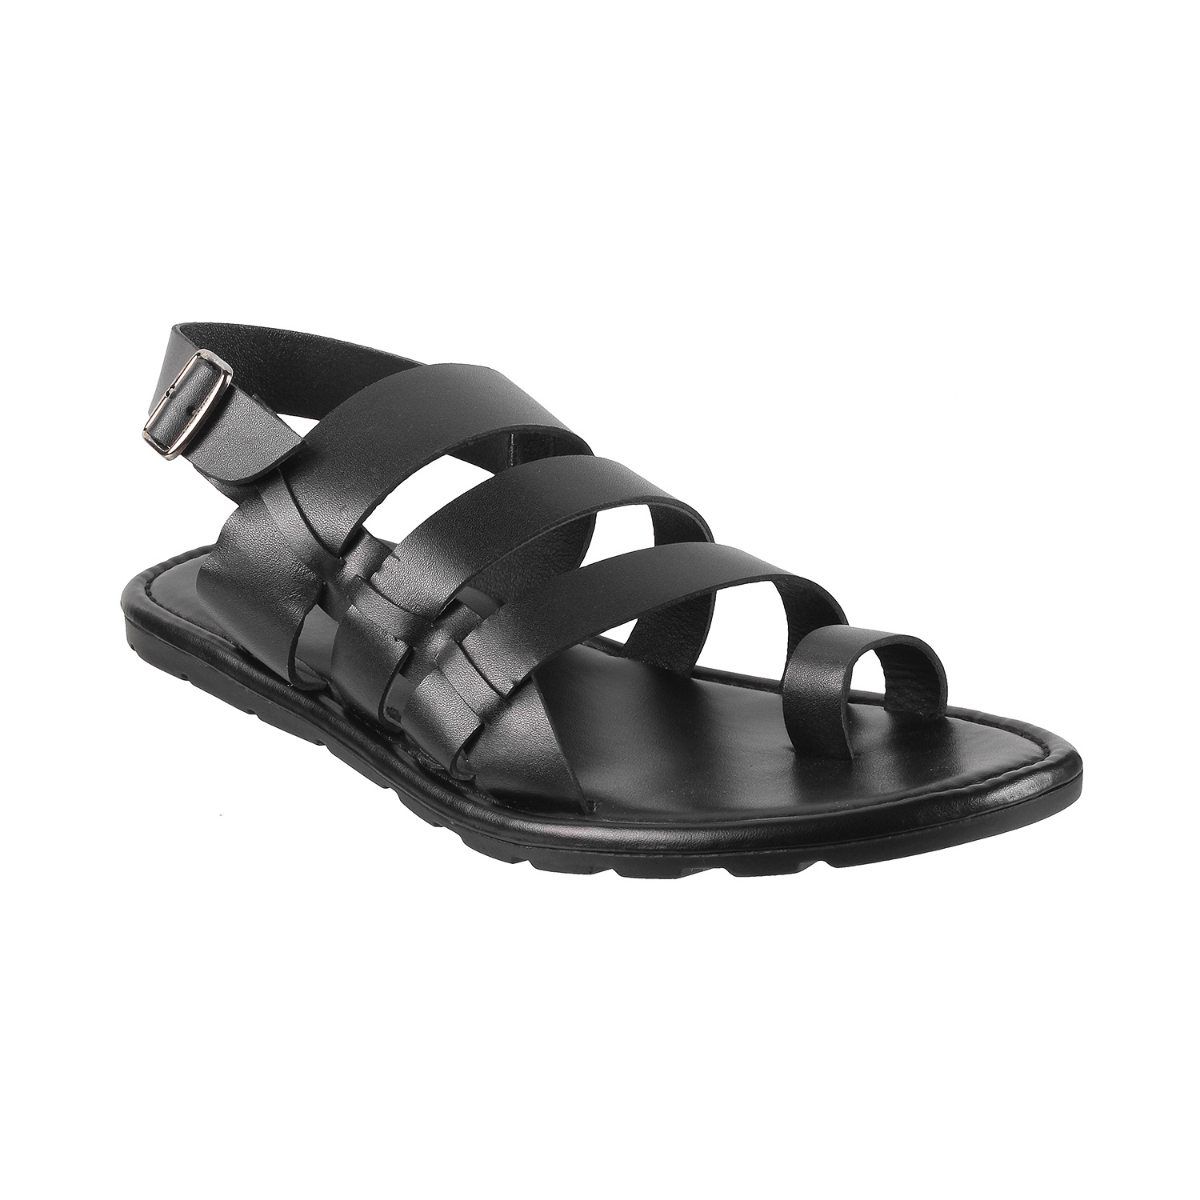 Buy Women Tan Casual Sandals Online | SKU: 33-3145-23-36-Metro Shoes